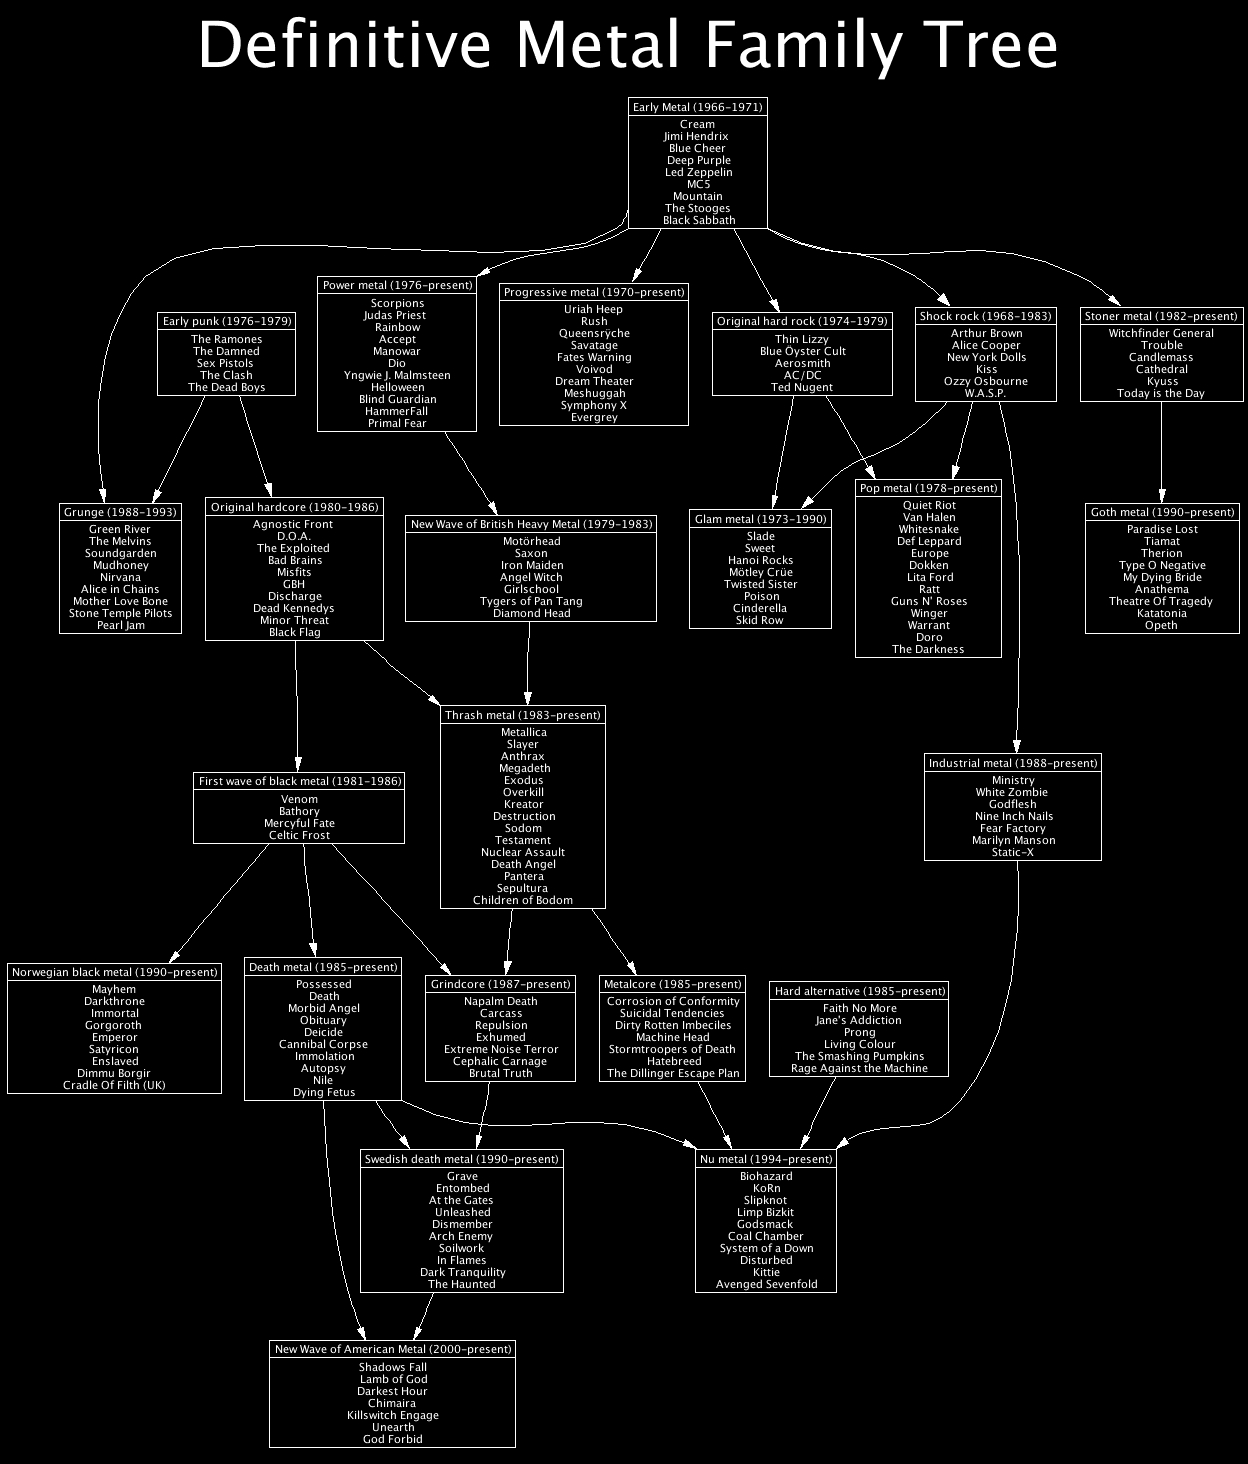 http://hewgill.com/~greg/definitive-metal-family-tree.png